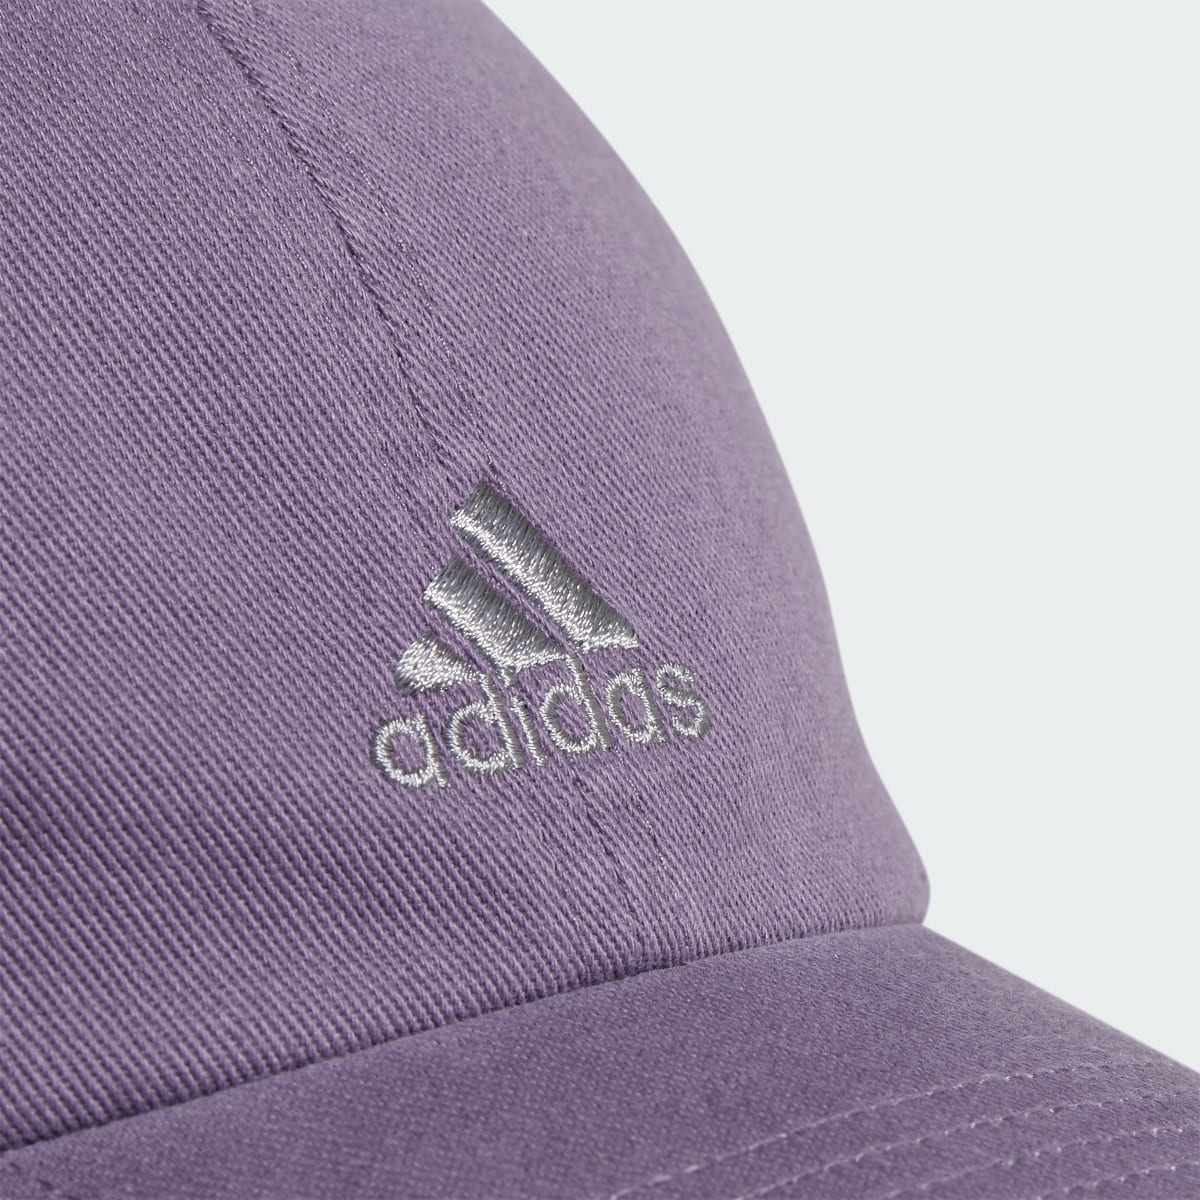 Adidas Saturday Hat. 6